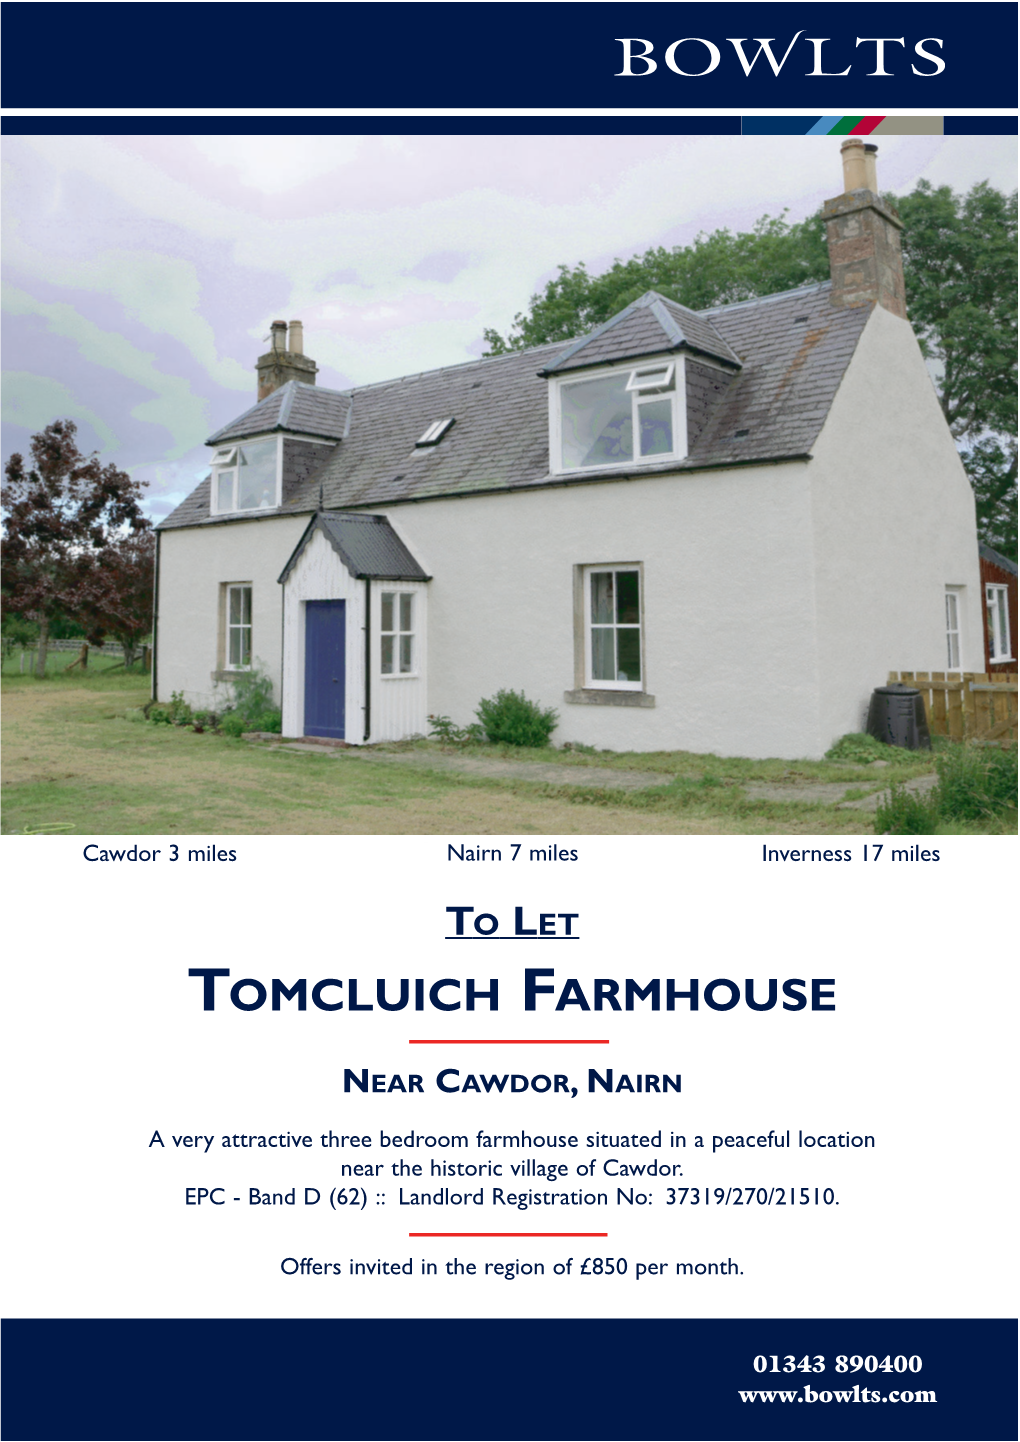 Tomcluich Farmhouse Mar 2021 Ordbreck.Qxd